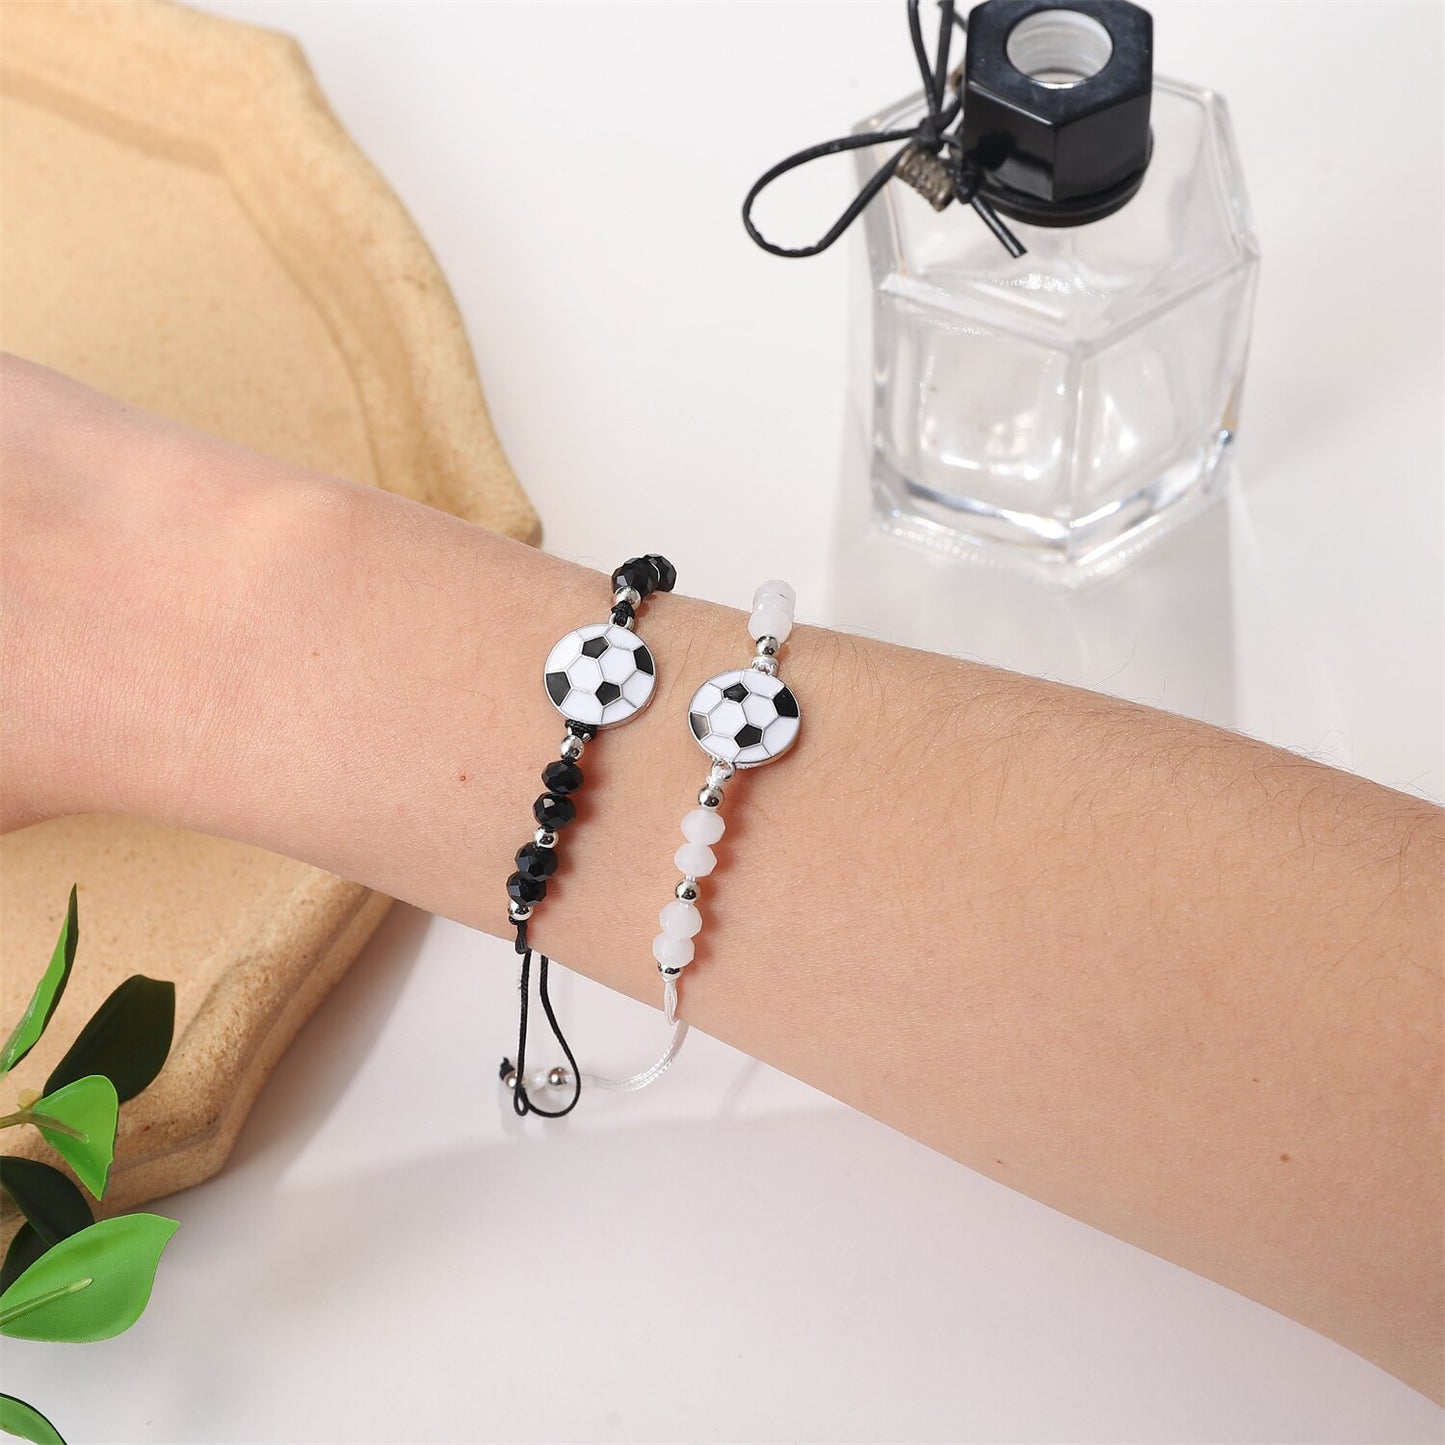 12pcs/lot Fashion Football Sports Bracelets Youth Sports Style Adjustable Braided Rope Chain Cuffs Wristband Jewelry